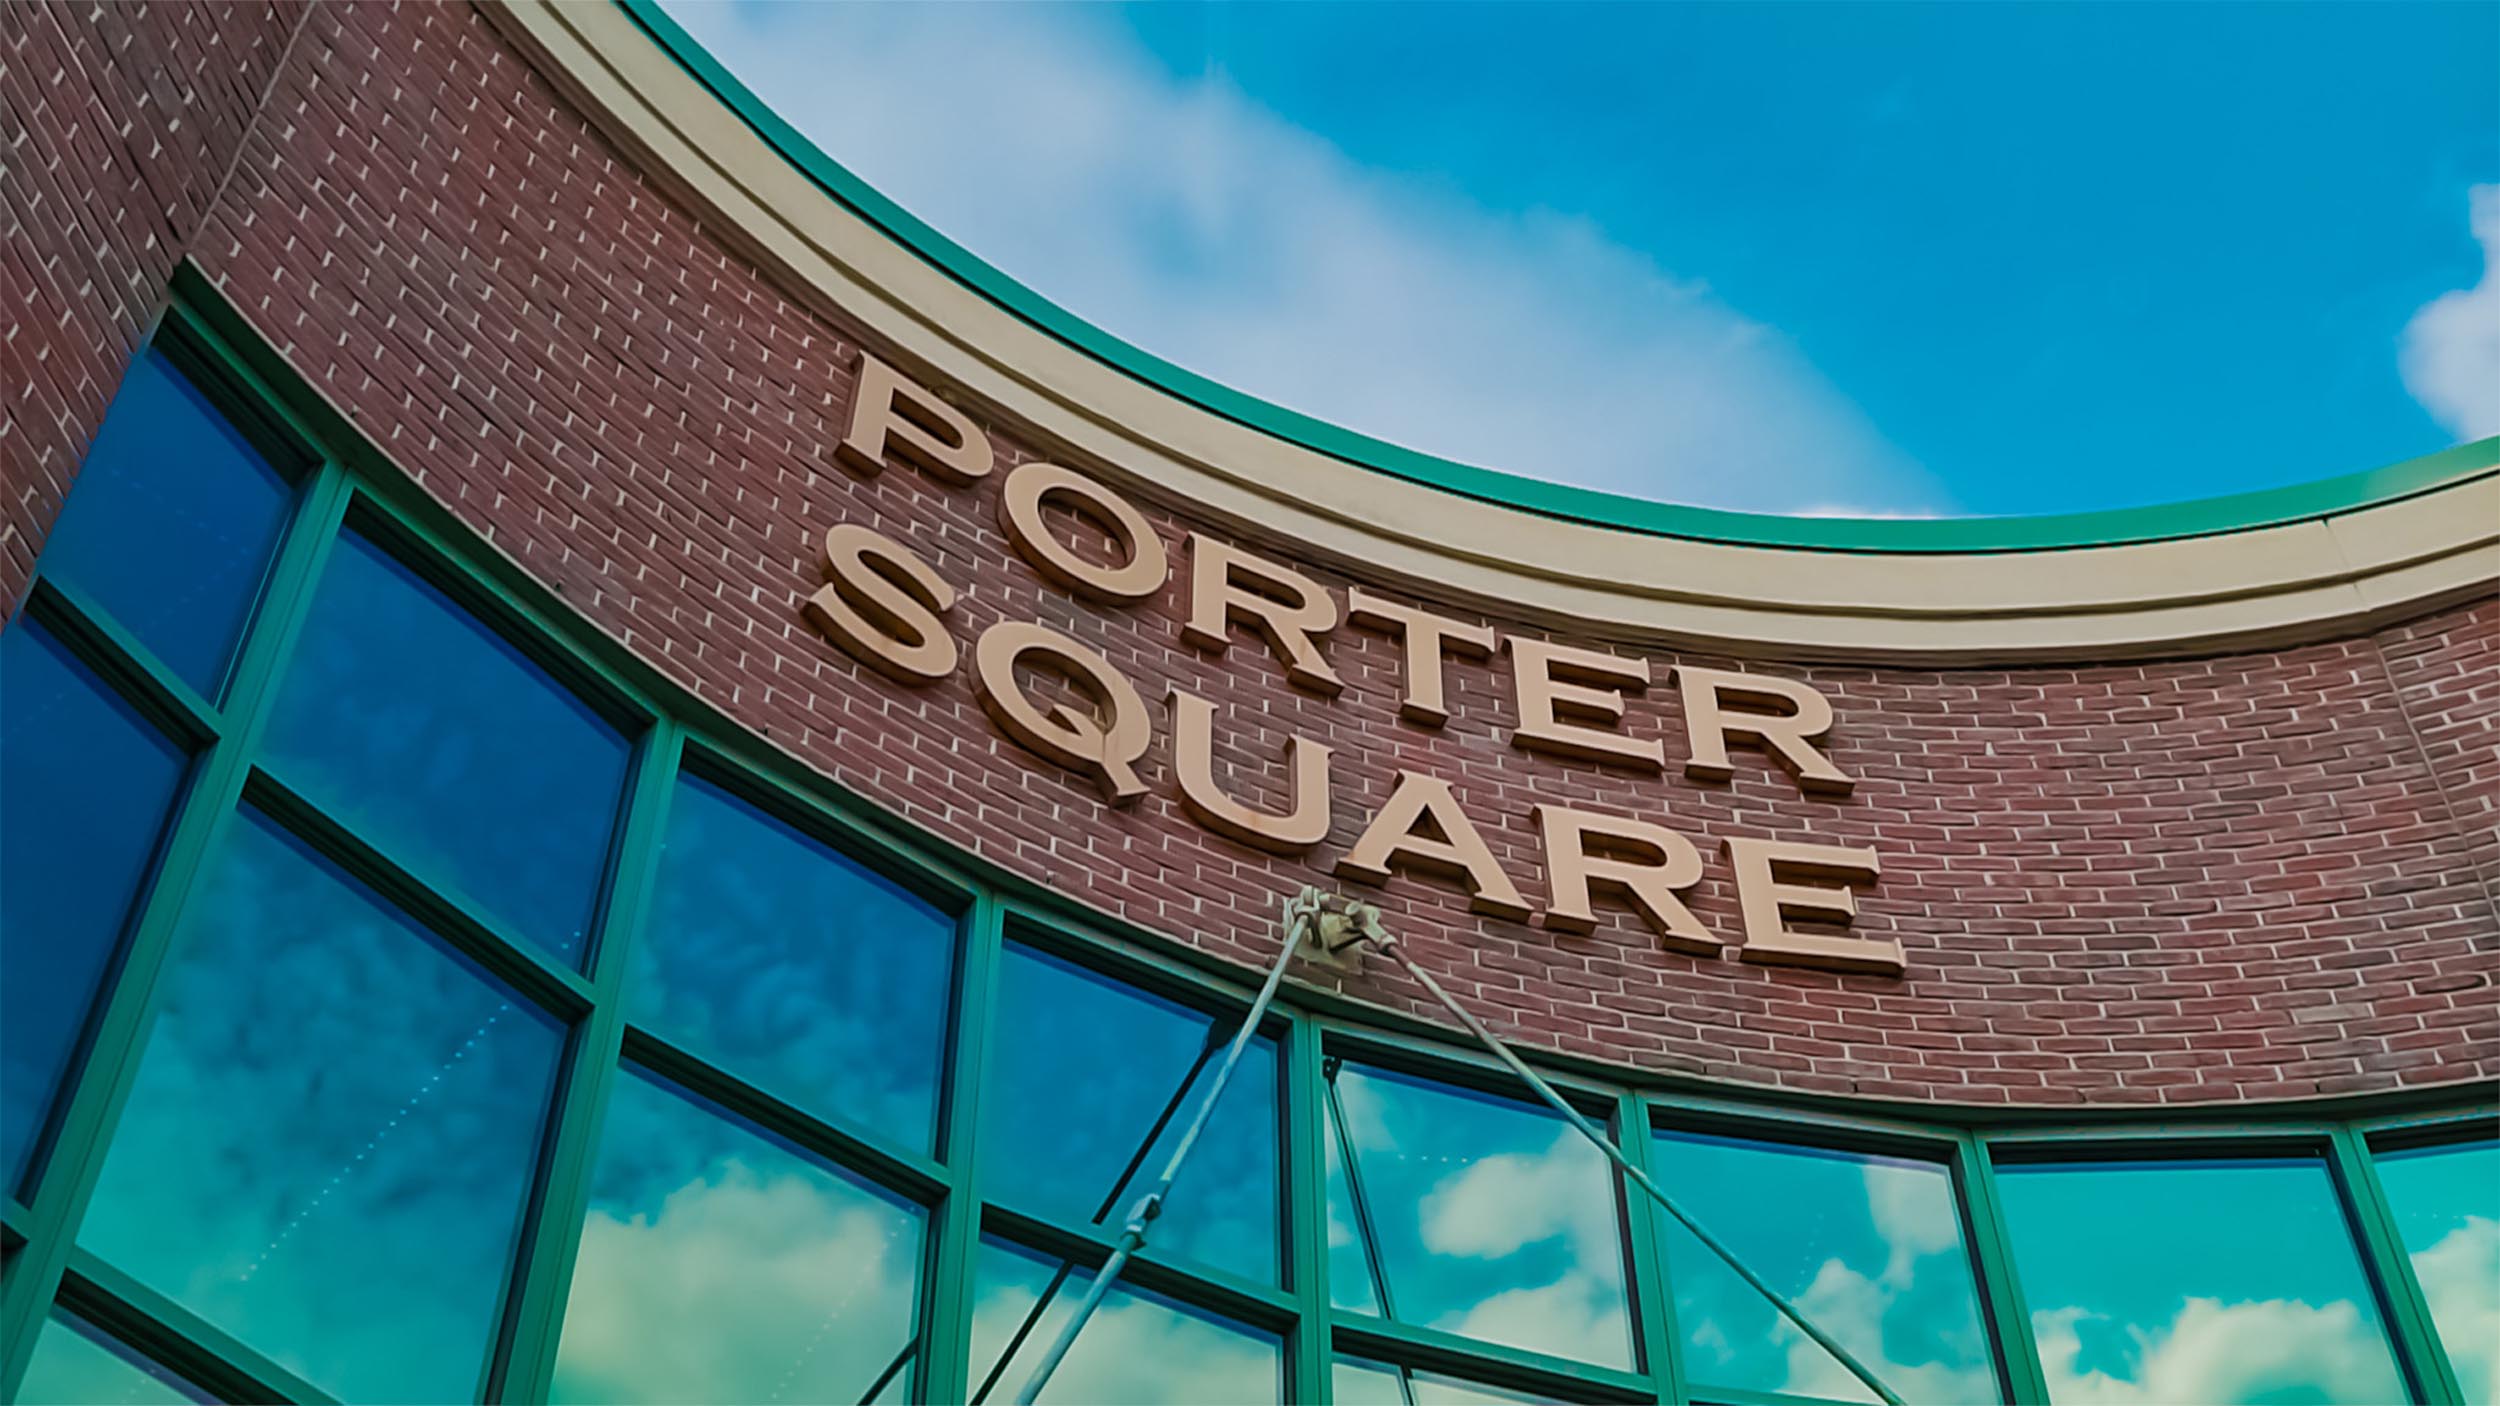 Porter Square